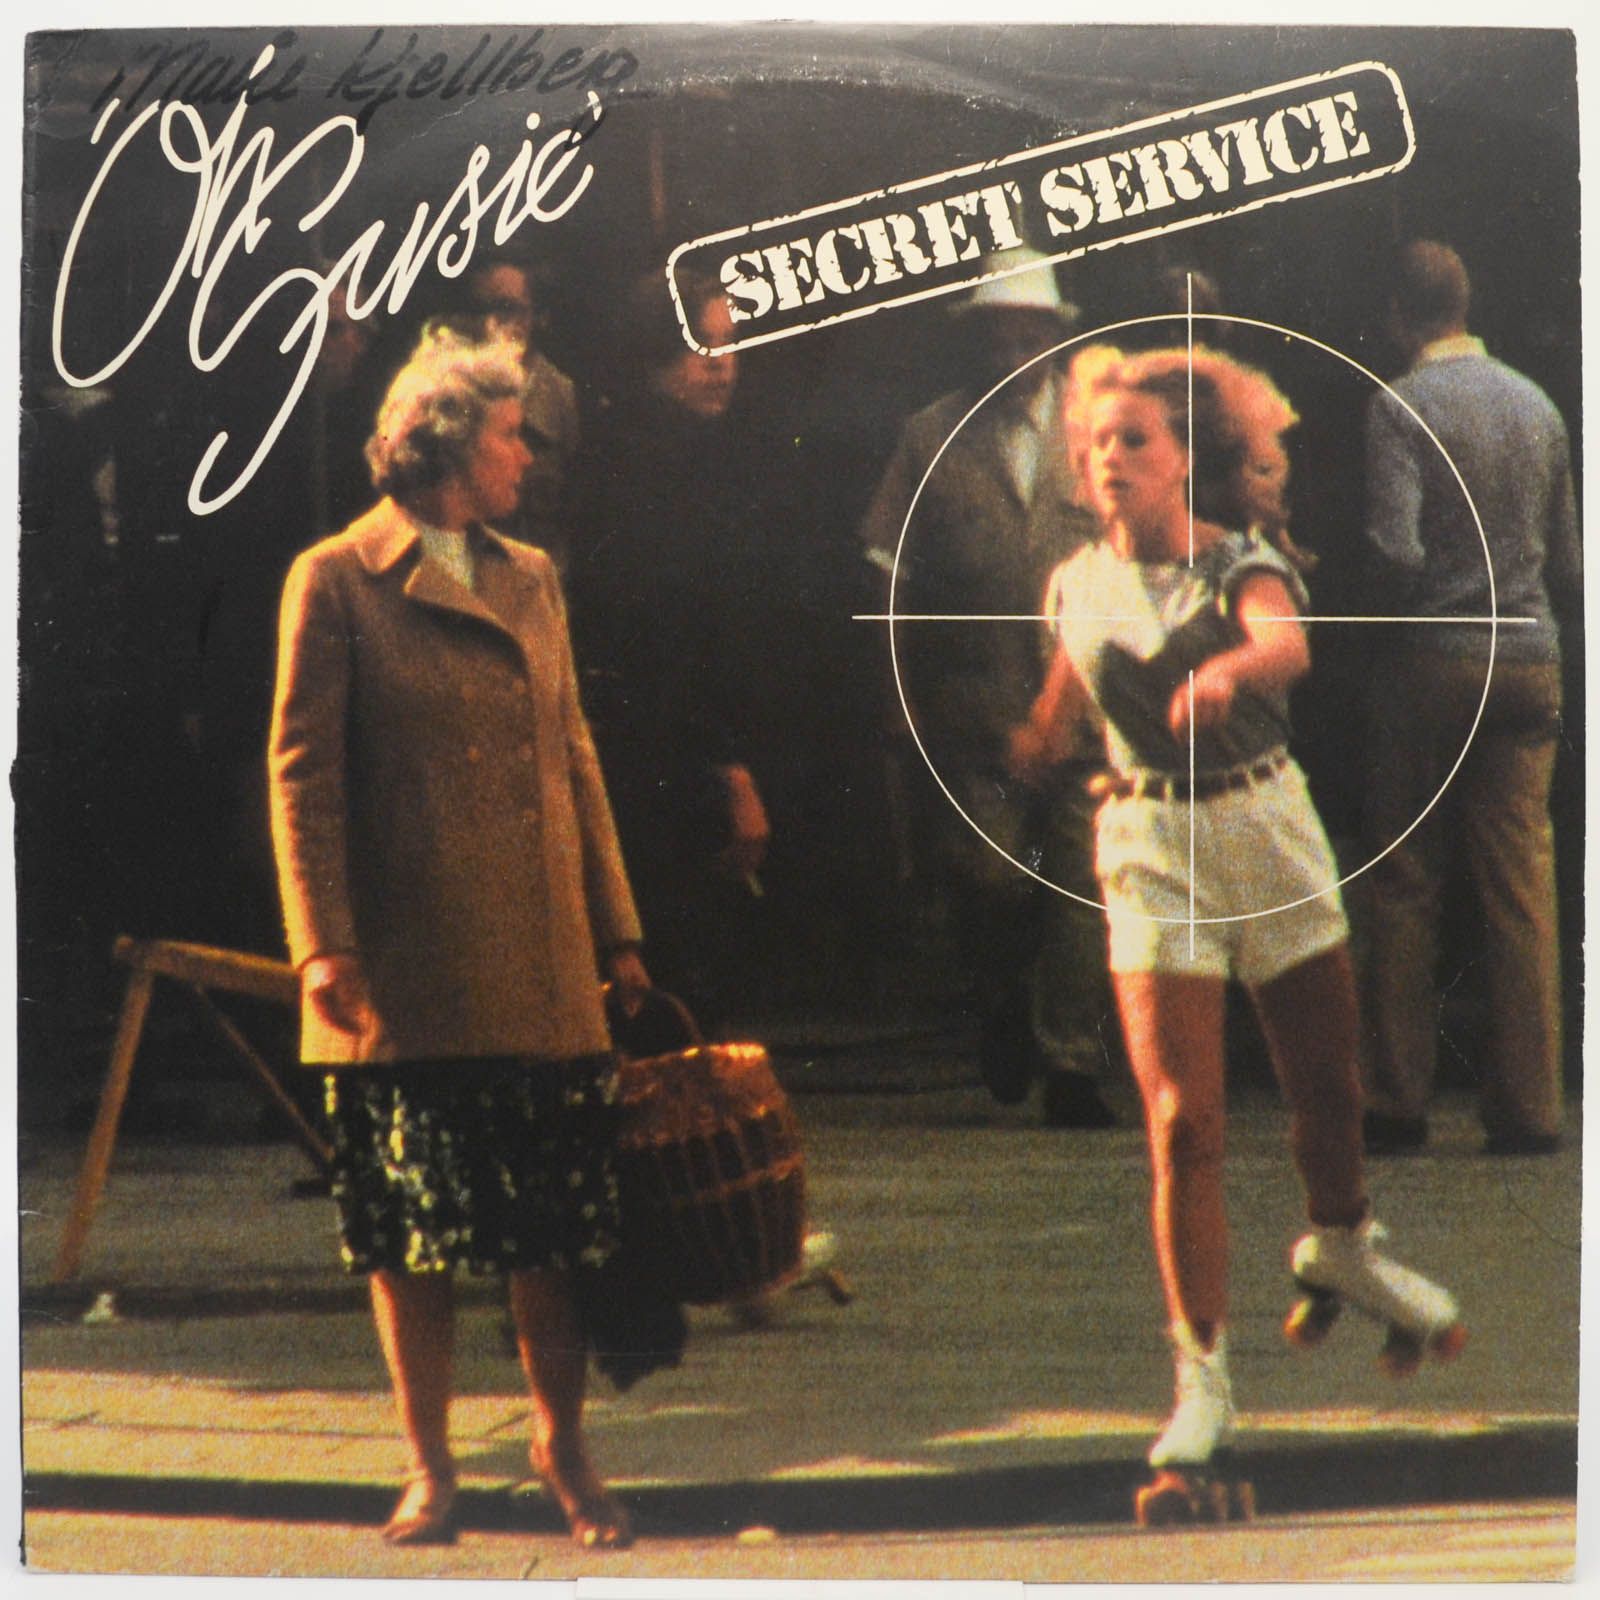 Secret Service — Oh Susie, 1979